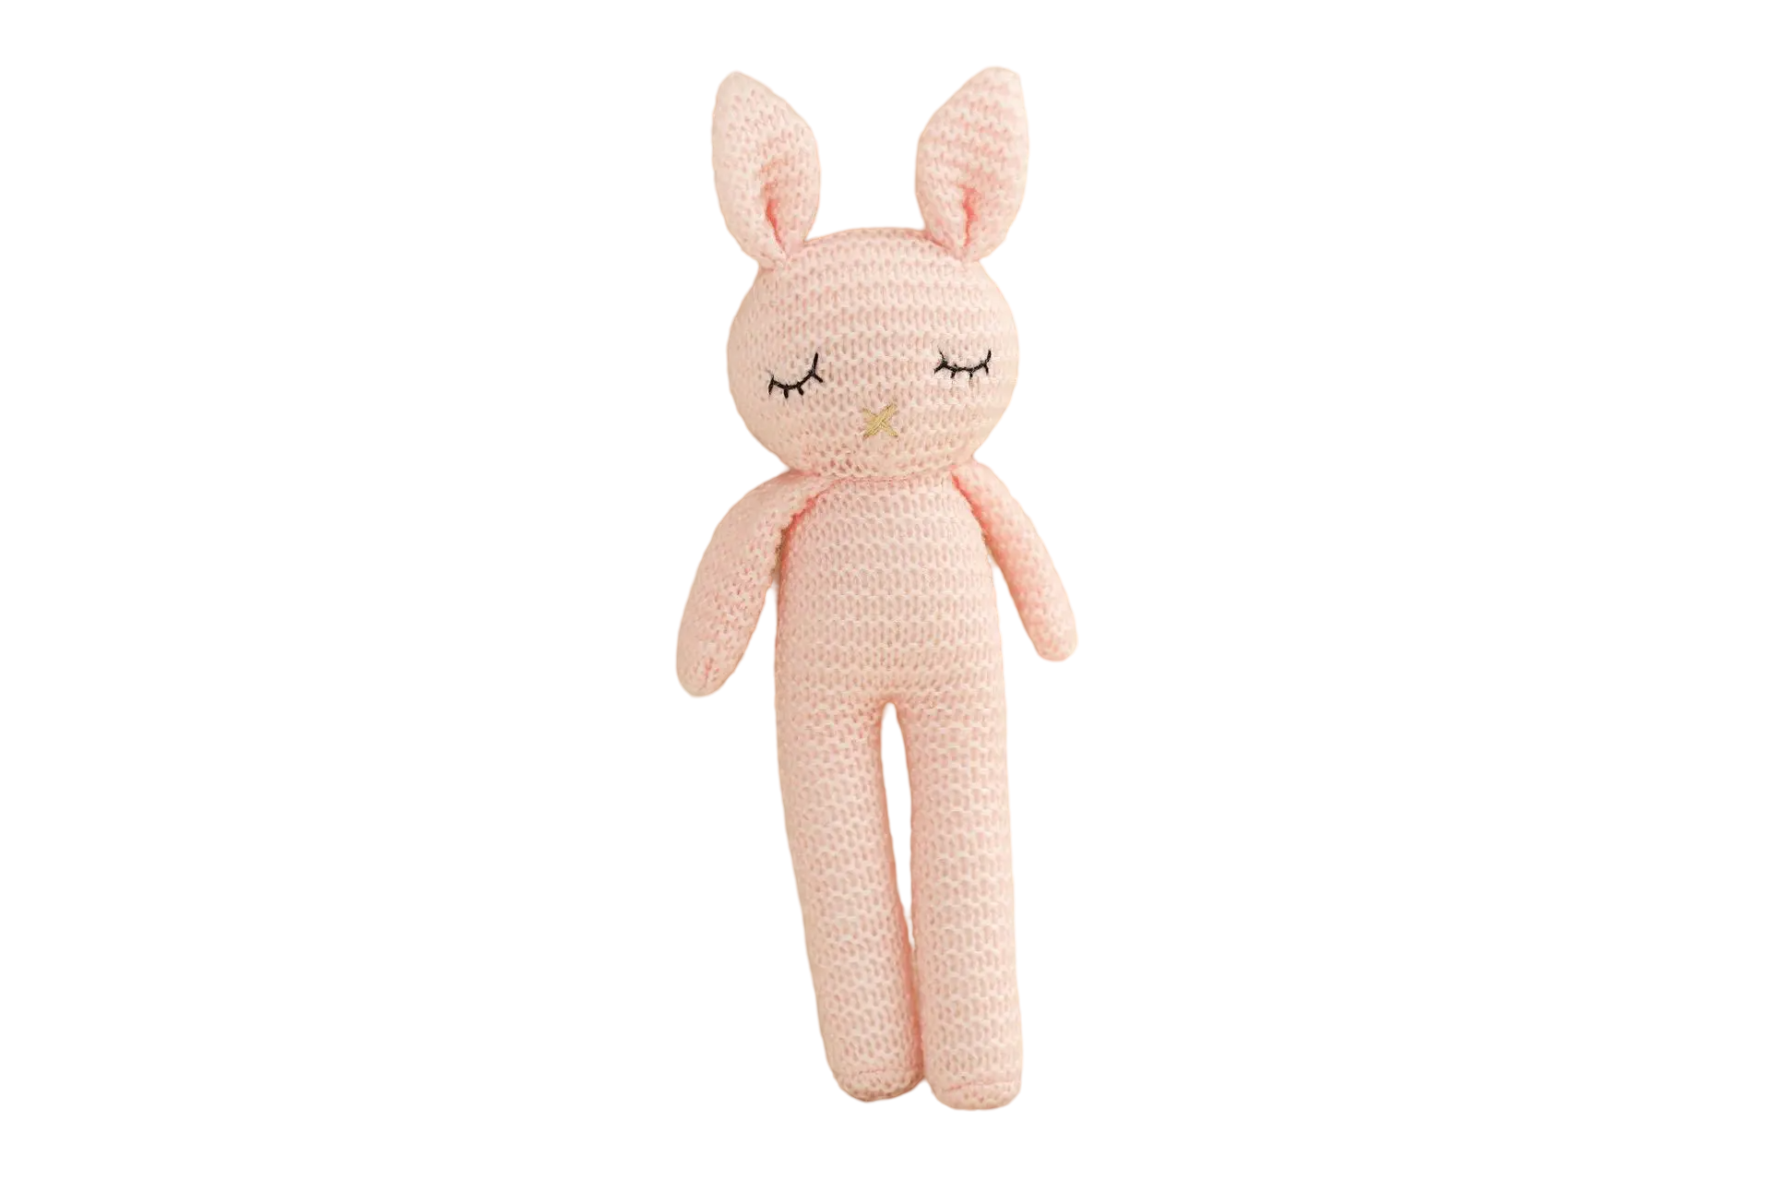 Handmade Rabbit Crochet Sleeping Plush Toy